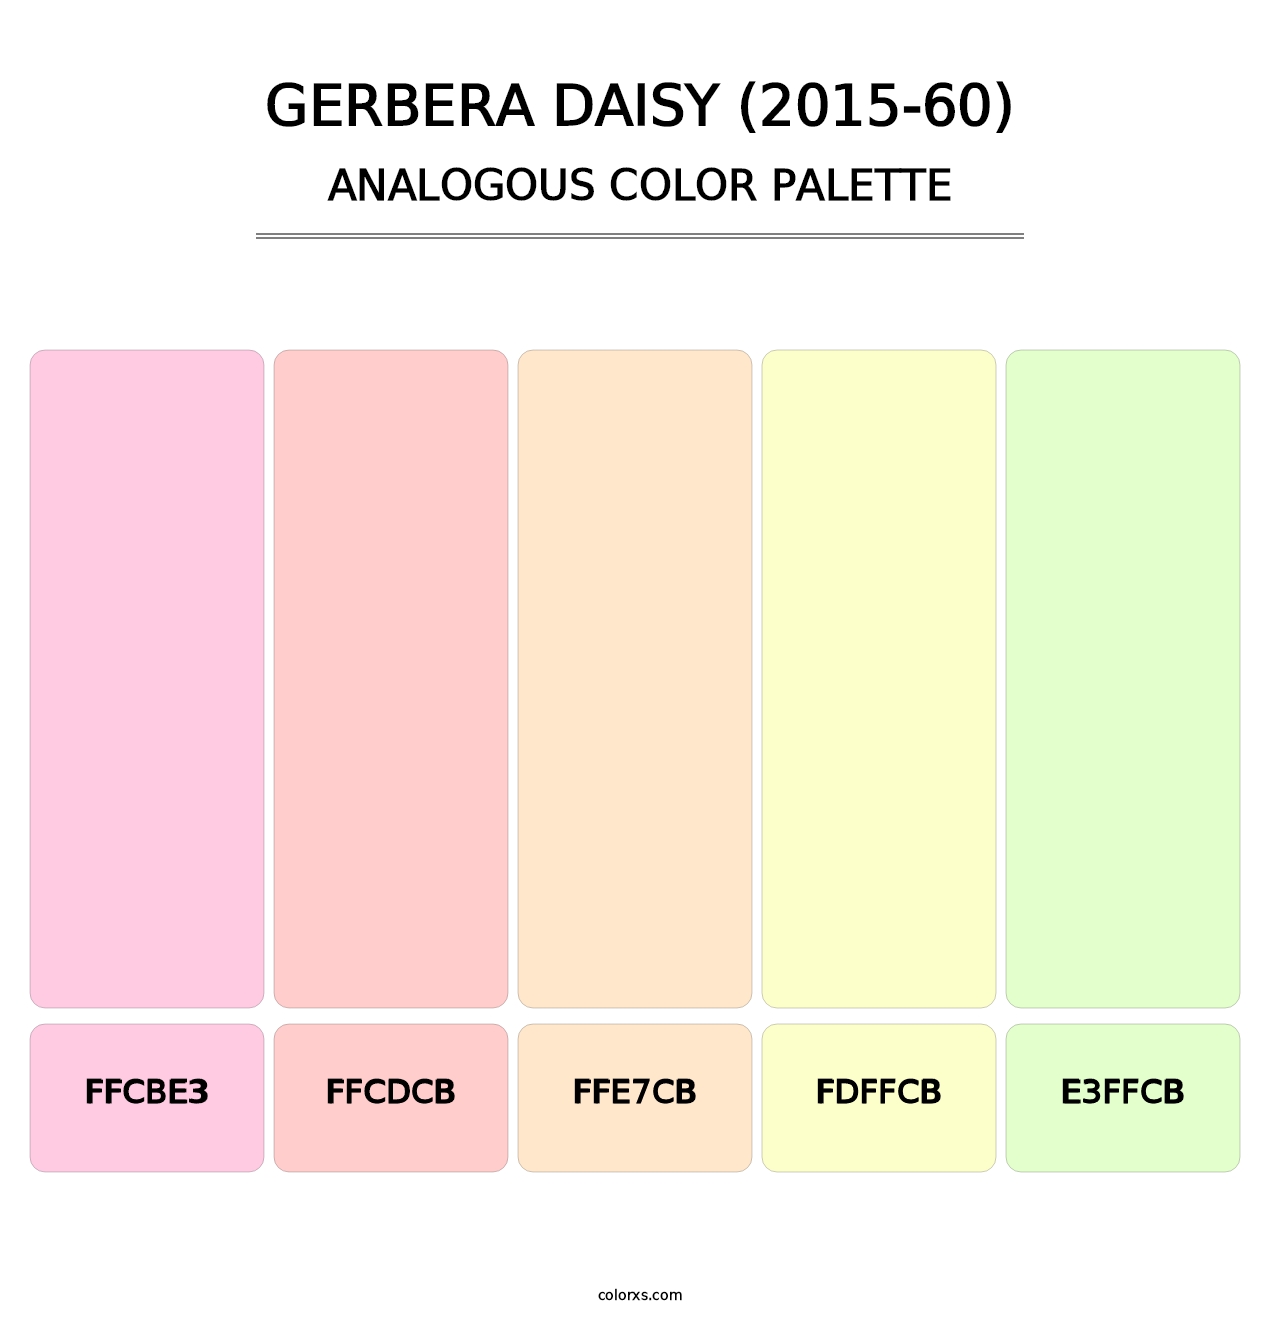 Gerbera Daisy (2015-60) - Analogous Color Palette